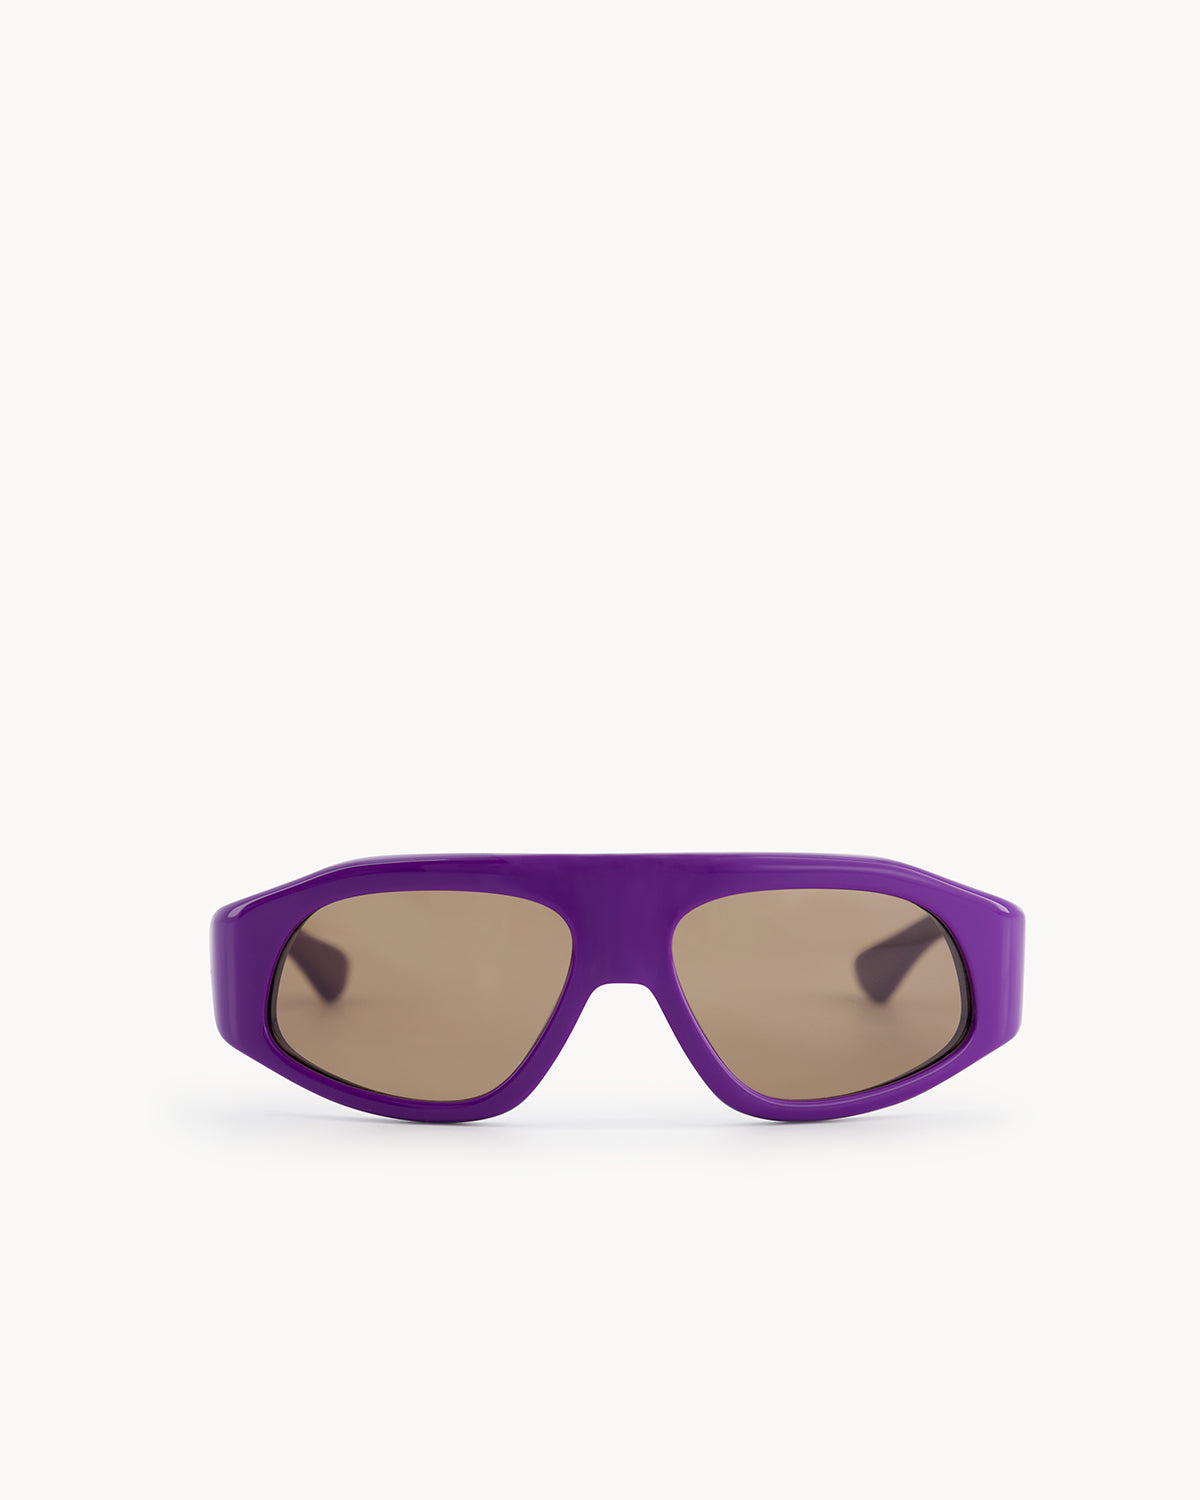 Port Tanger Irfan Sunglasses in Deep Purple Acetate and Black Lenses 1